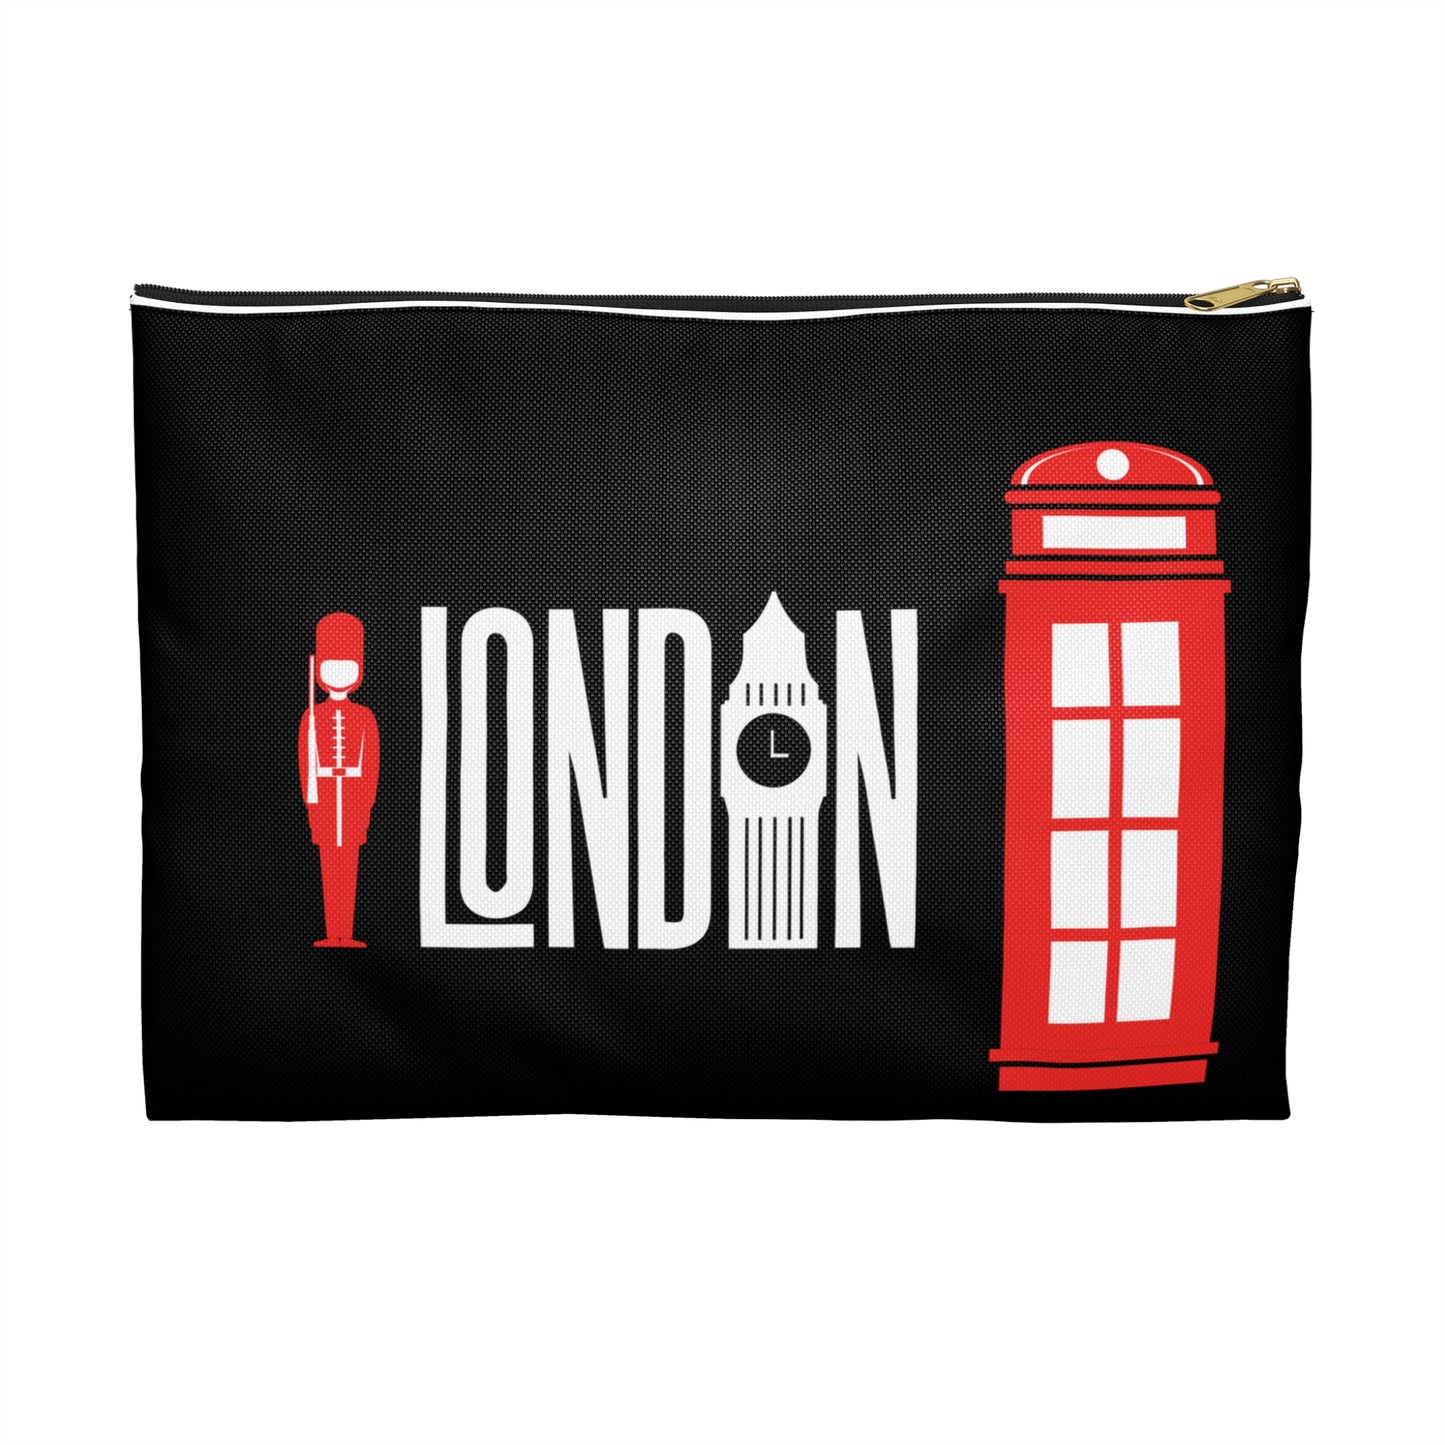 London Accessory Pouch, British Bag